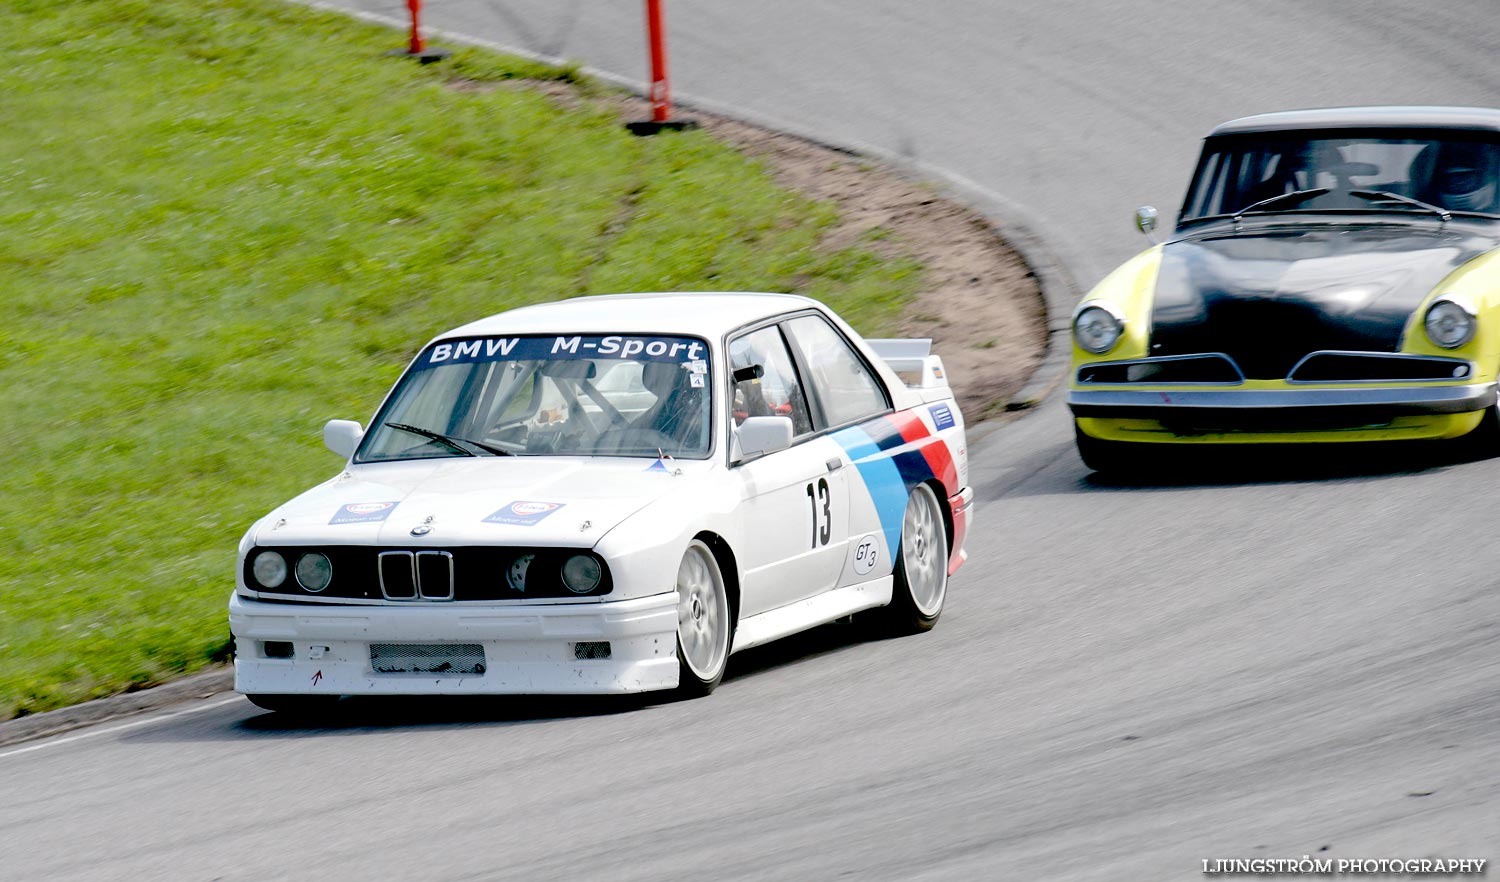 SSK Raceweek,mix,Kinnekulle Ring,Götene,Sverige,Motorsport,,2009,107529